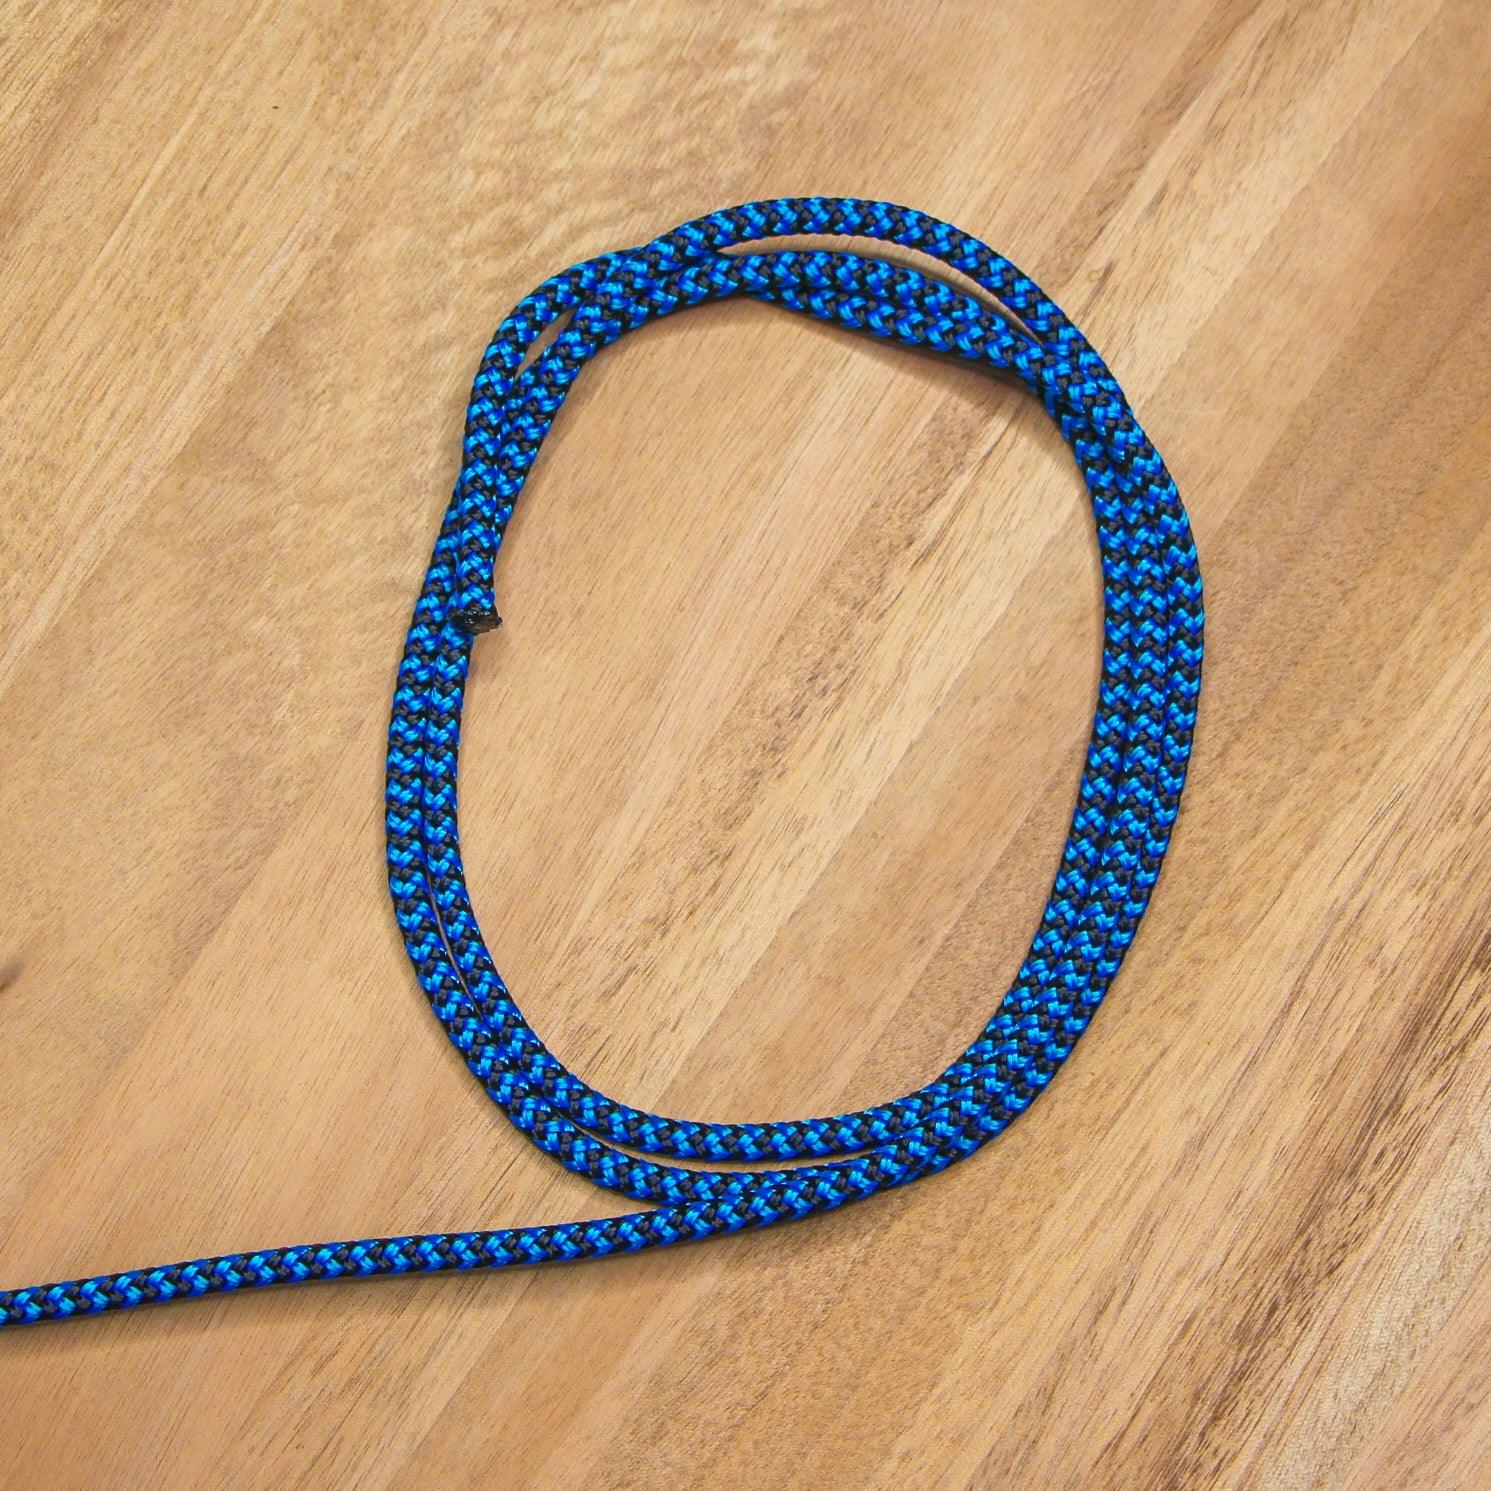 Marine Rope - Blue-Black zig zag - 6mm* - Cams Cords